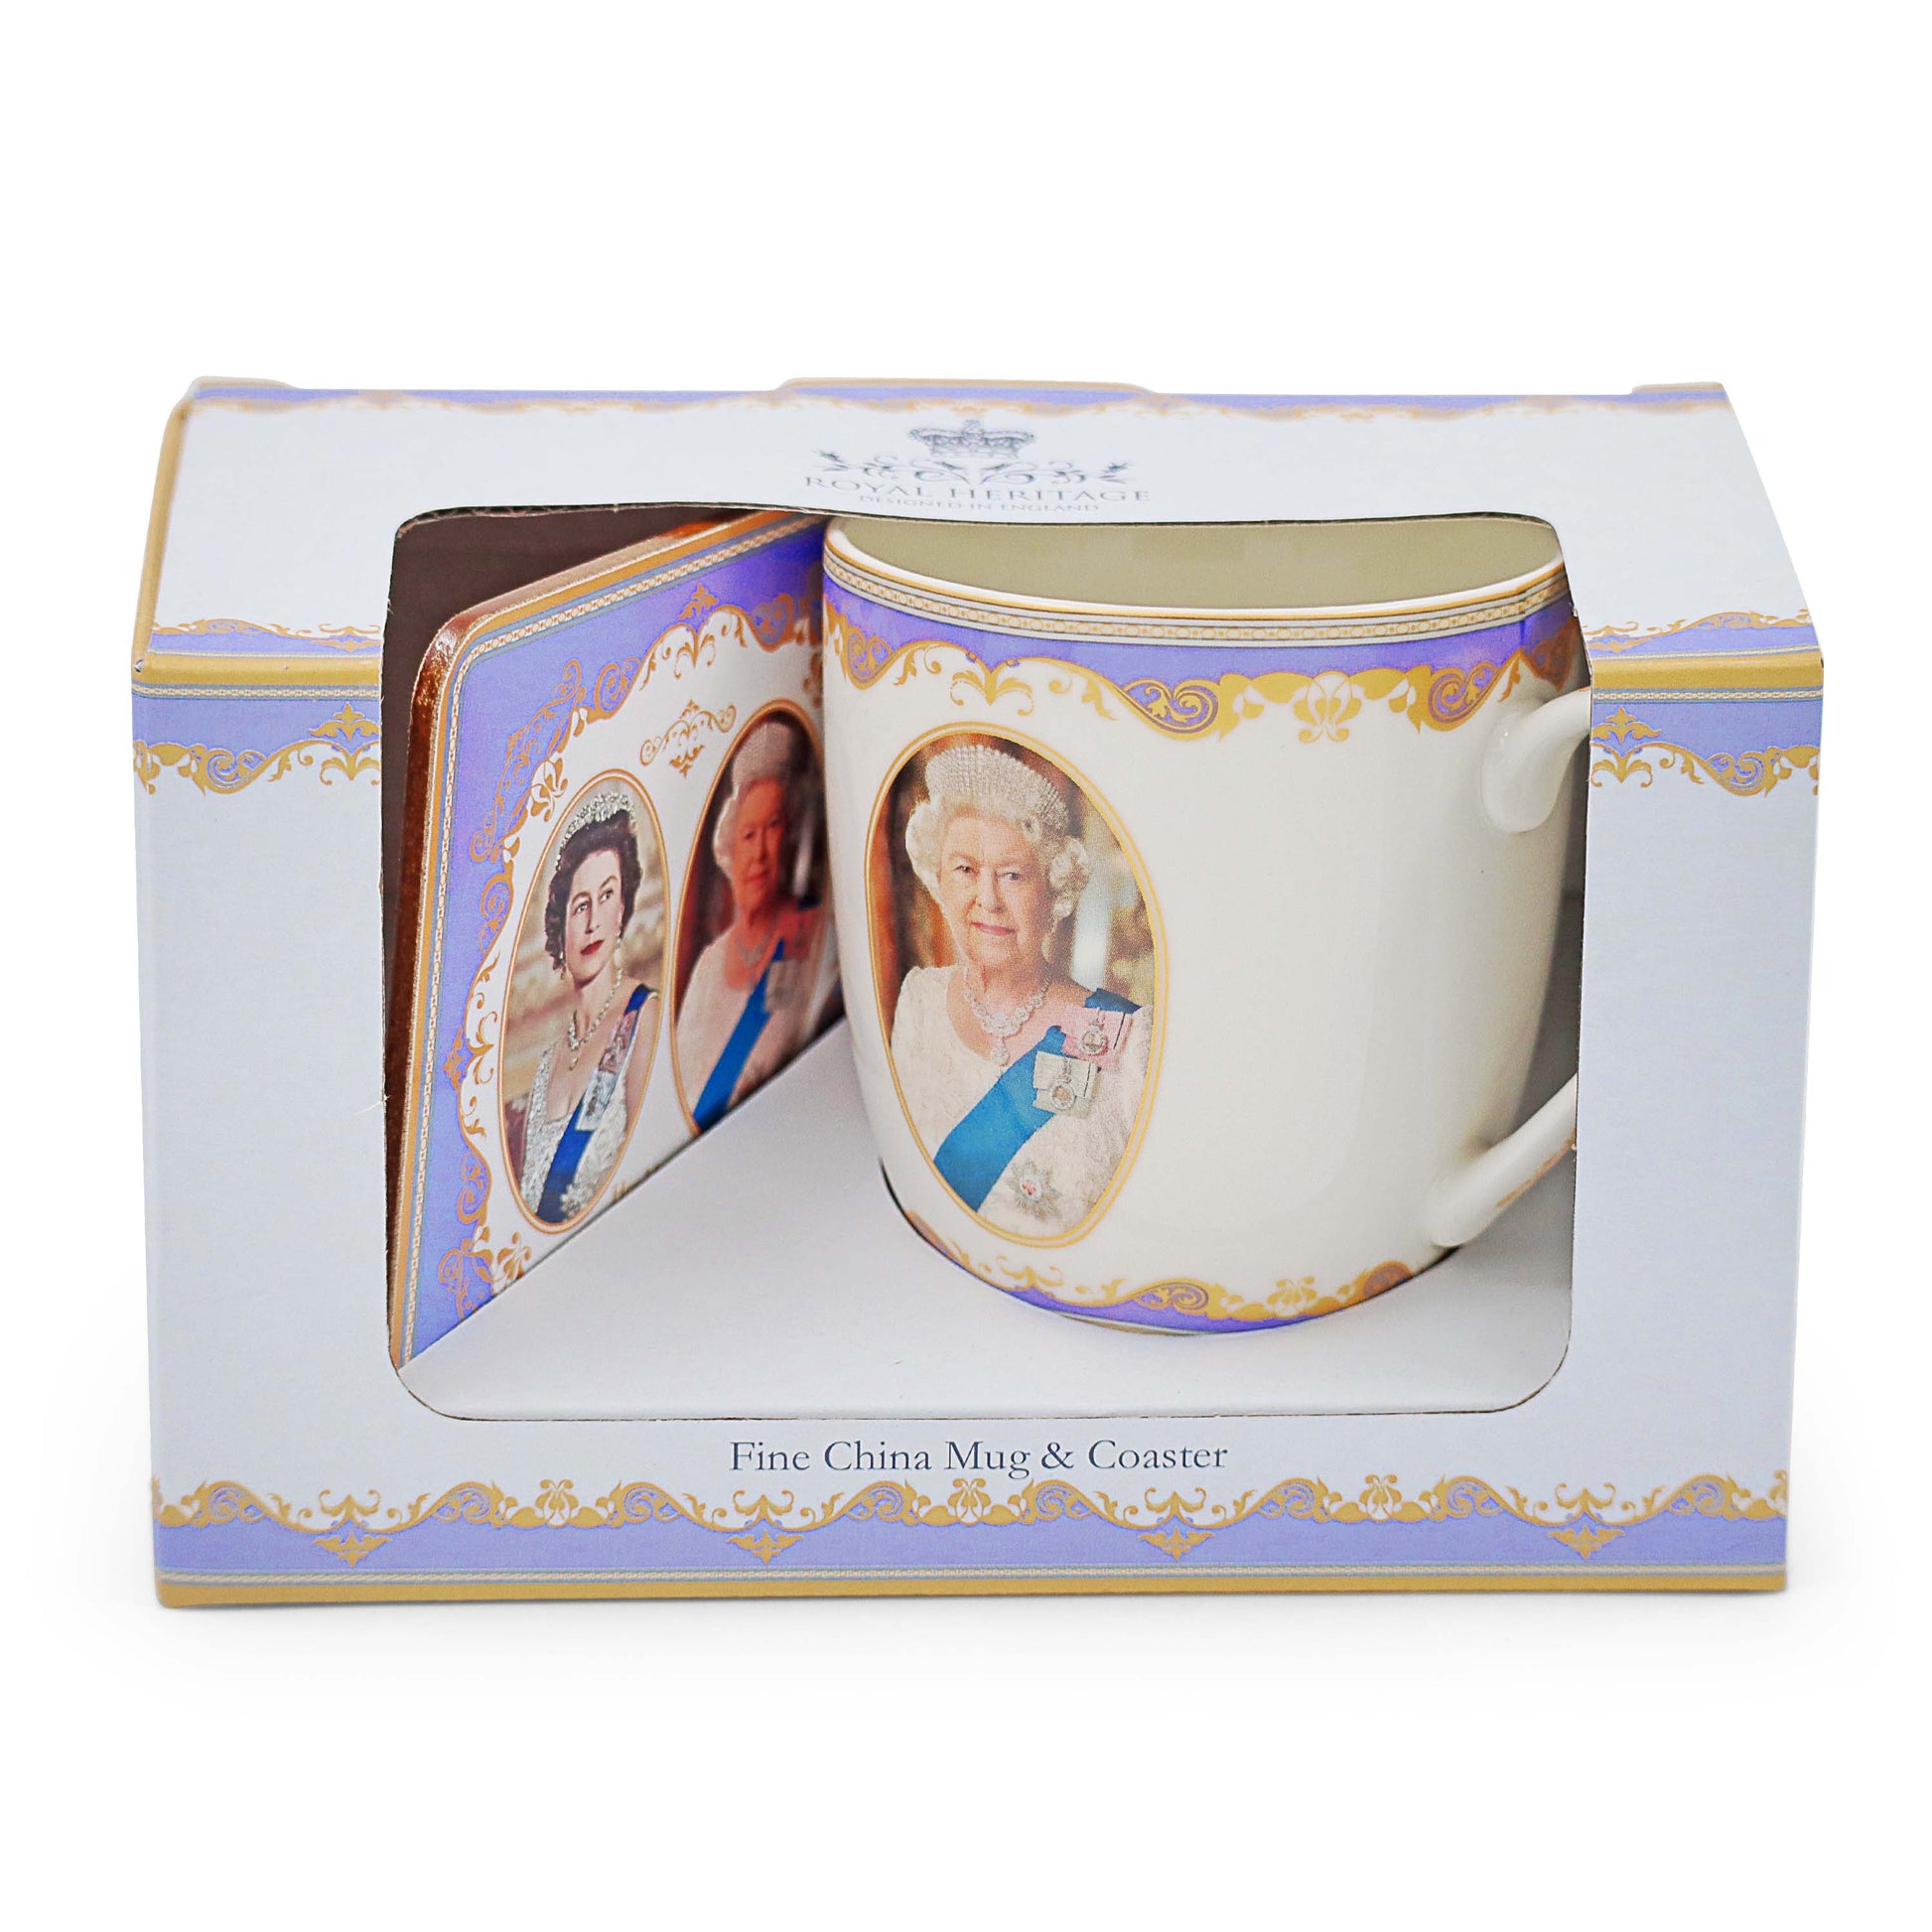 Queen Elizabeth II coaster and mug set